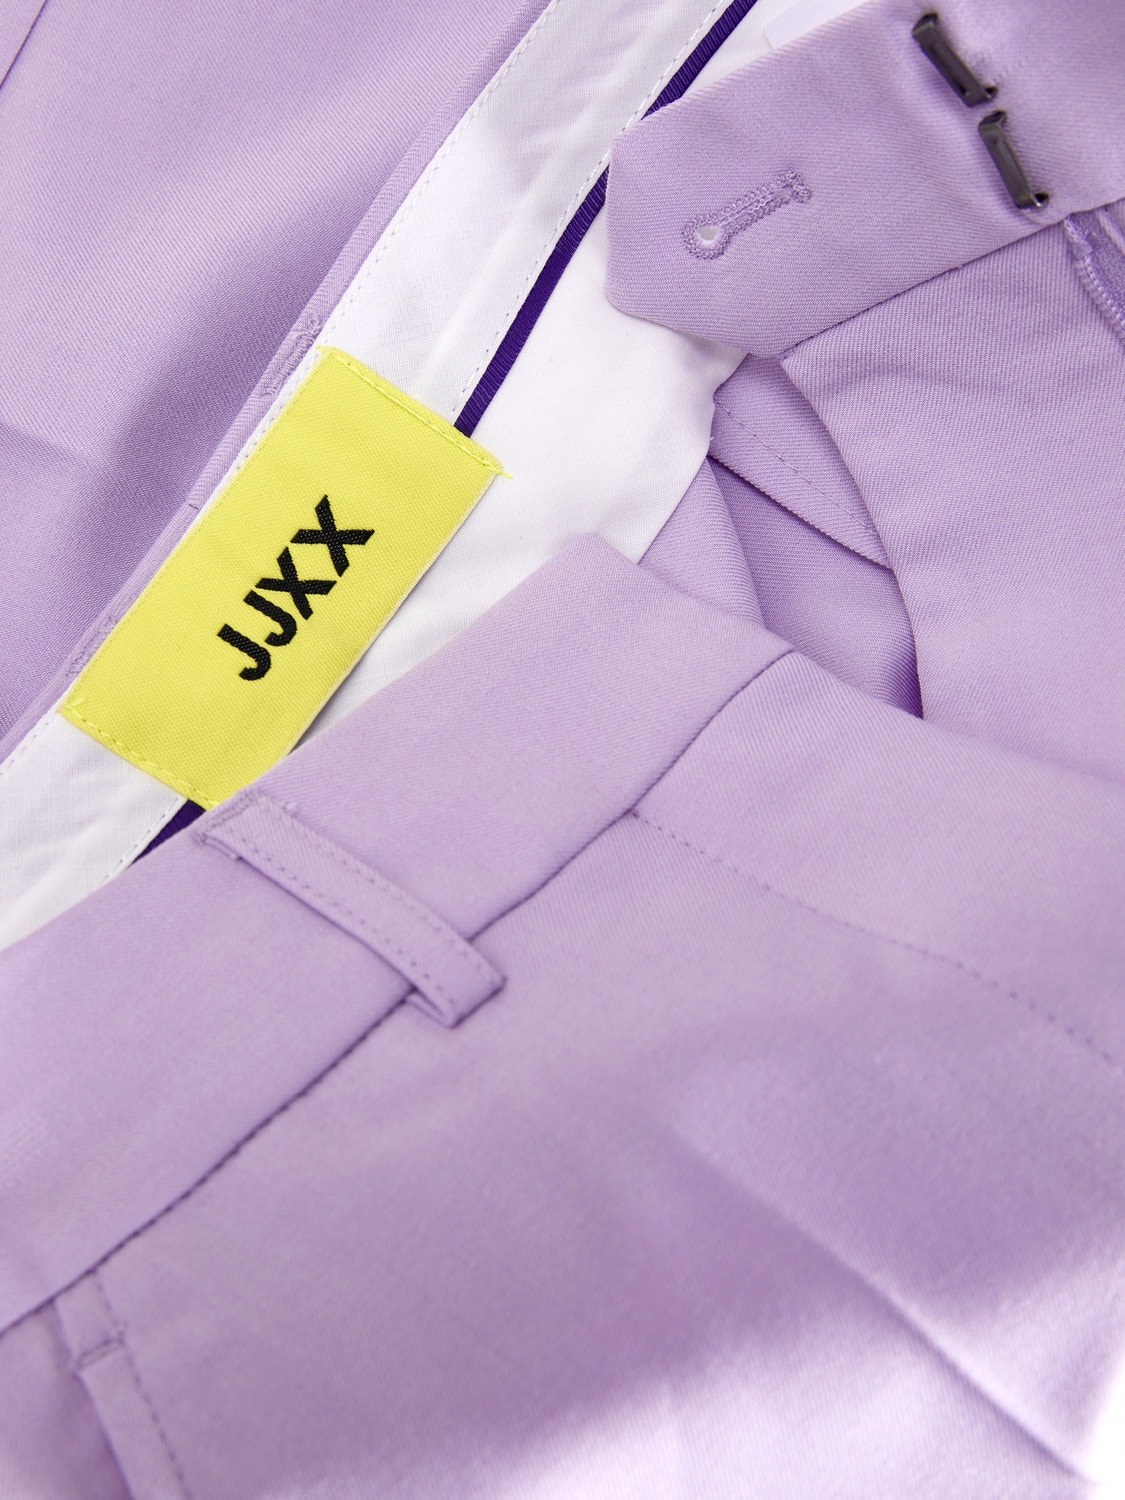 JJXX JXMARY Classic trousers -Lilac Breeze - 12200674